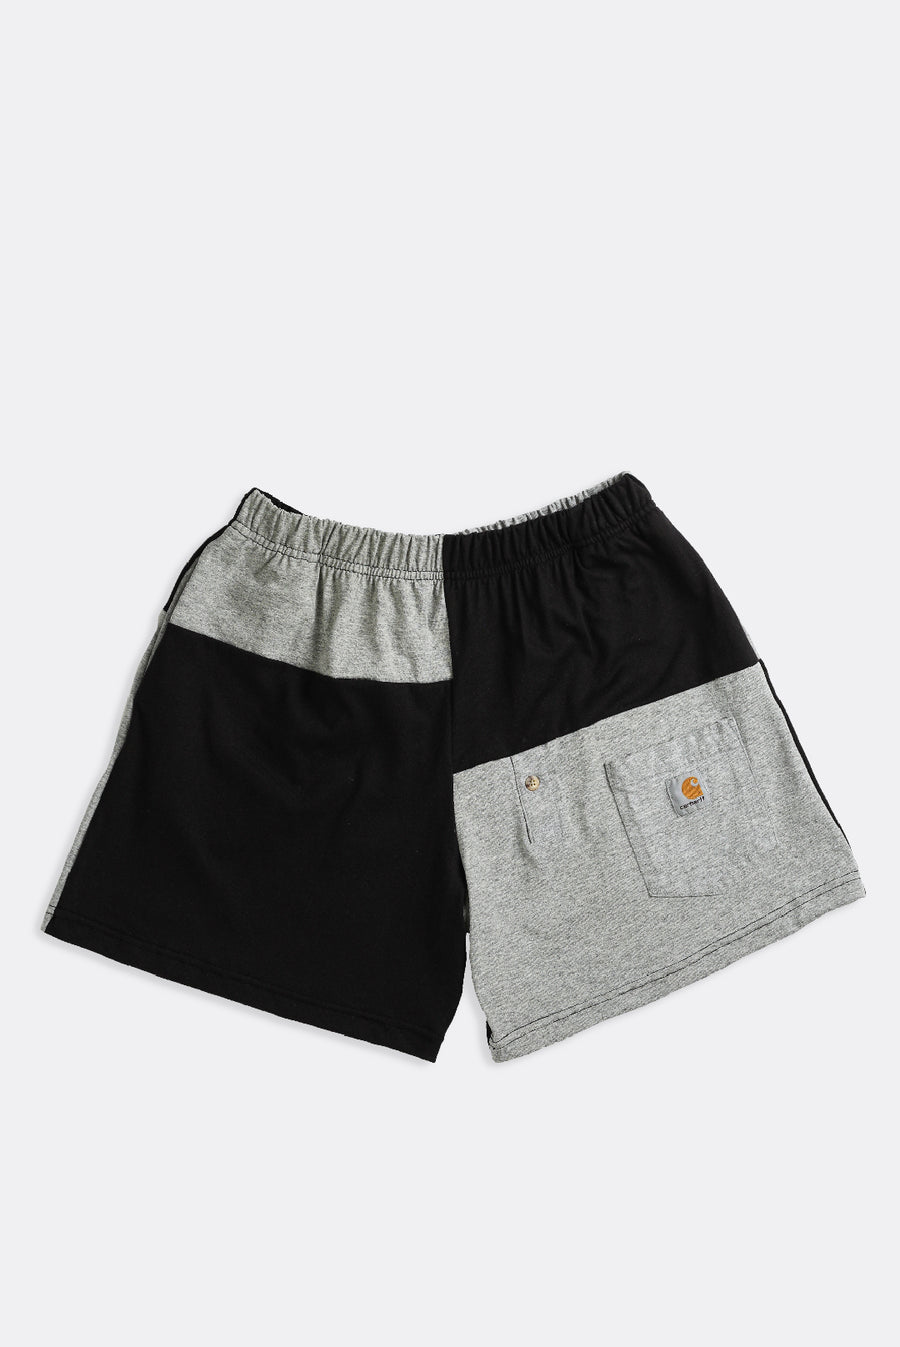 Unisex Rework Carhartt Patchwork Tee Shorts - XS, S, M, L, XL